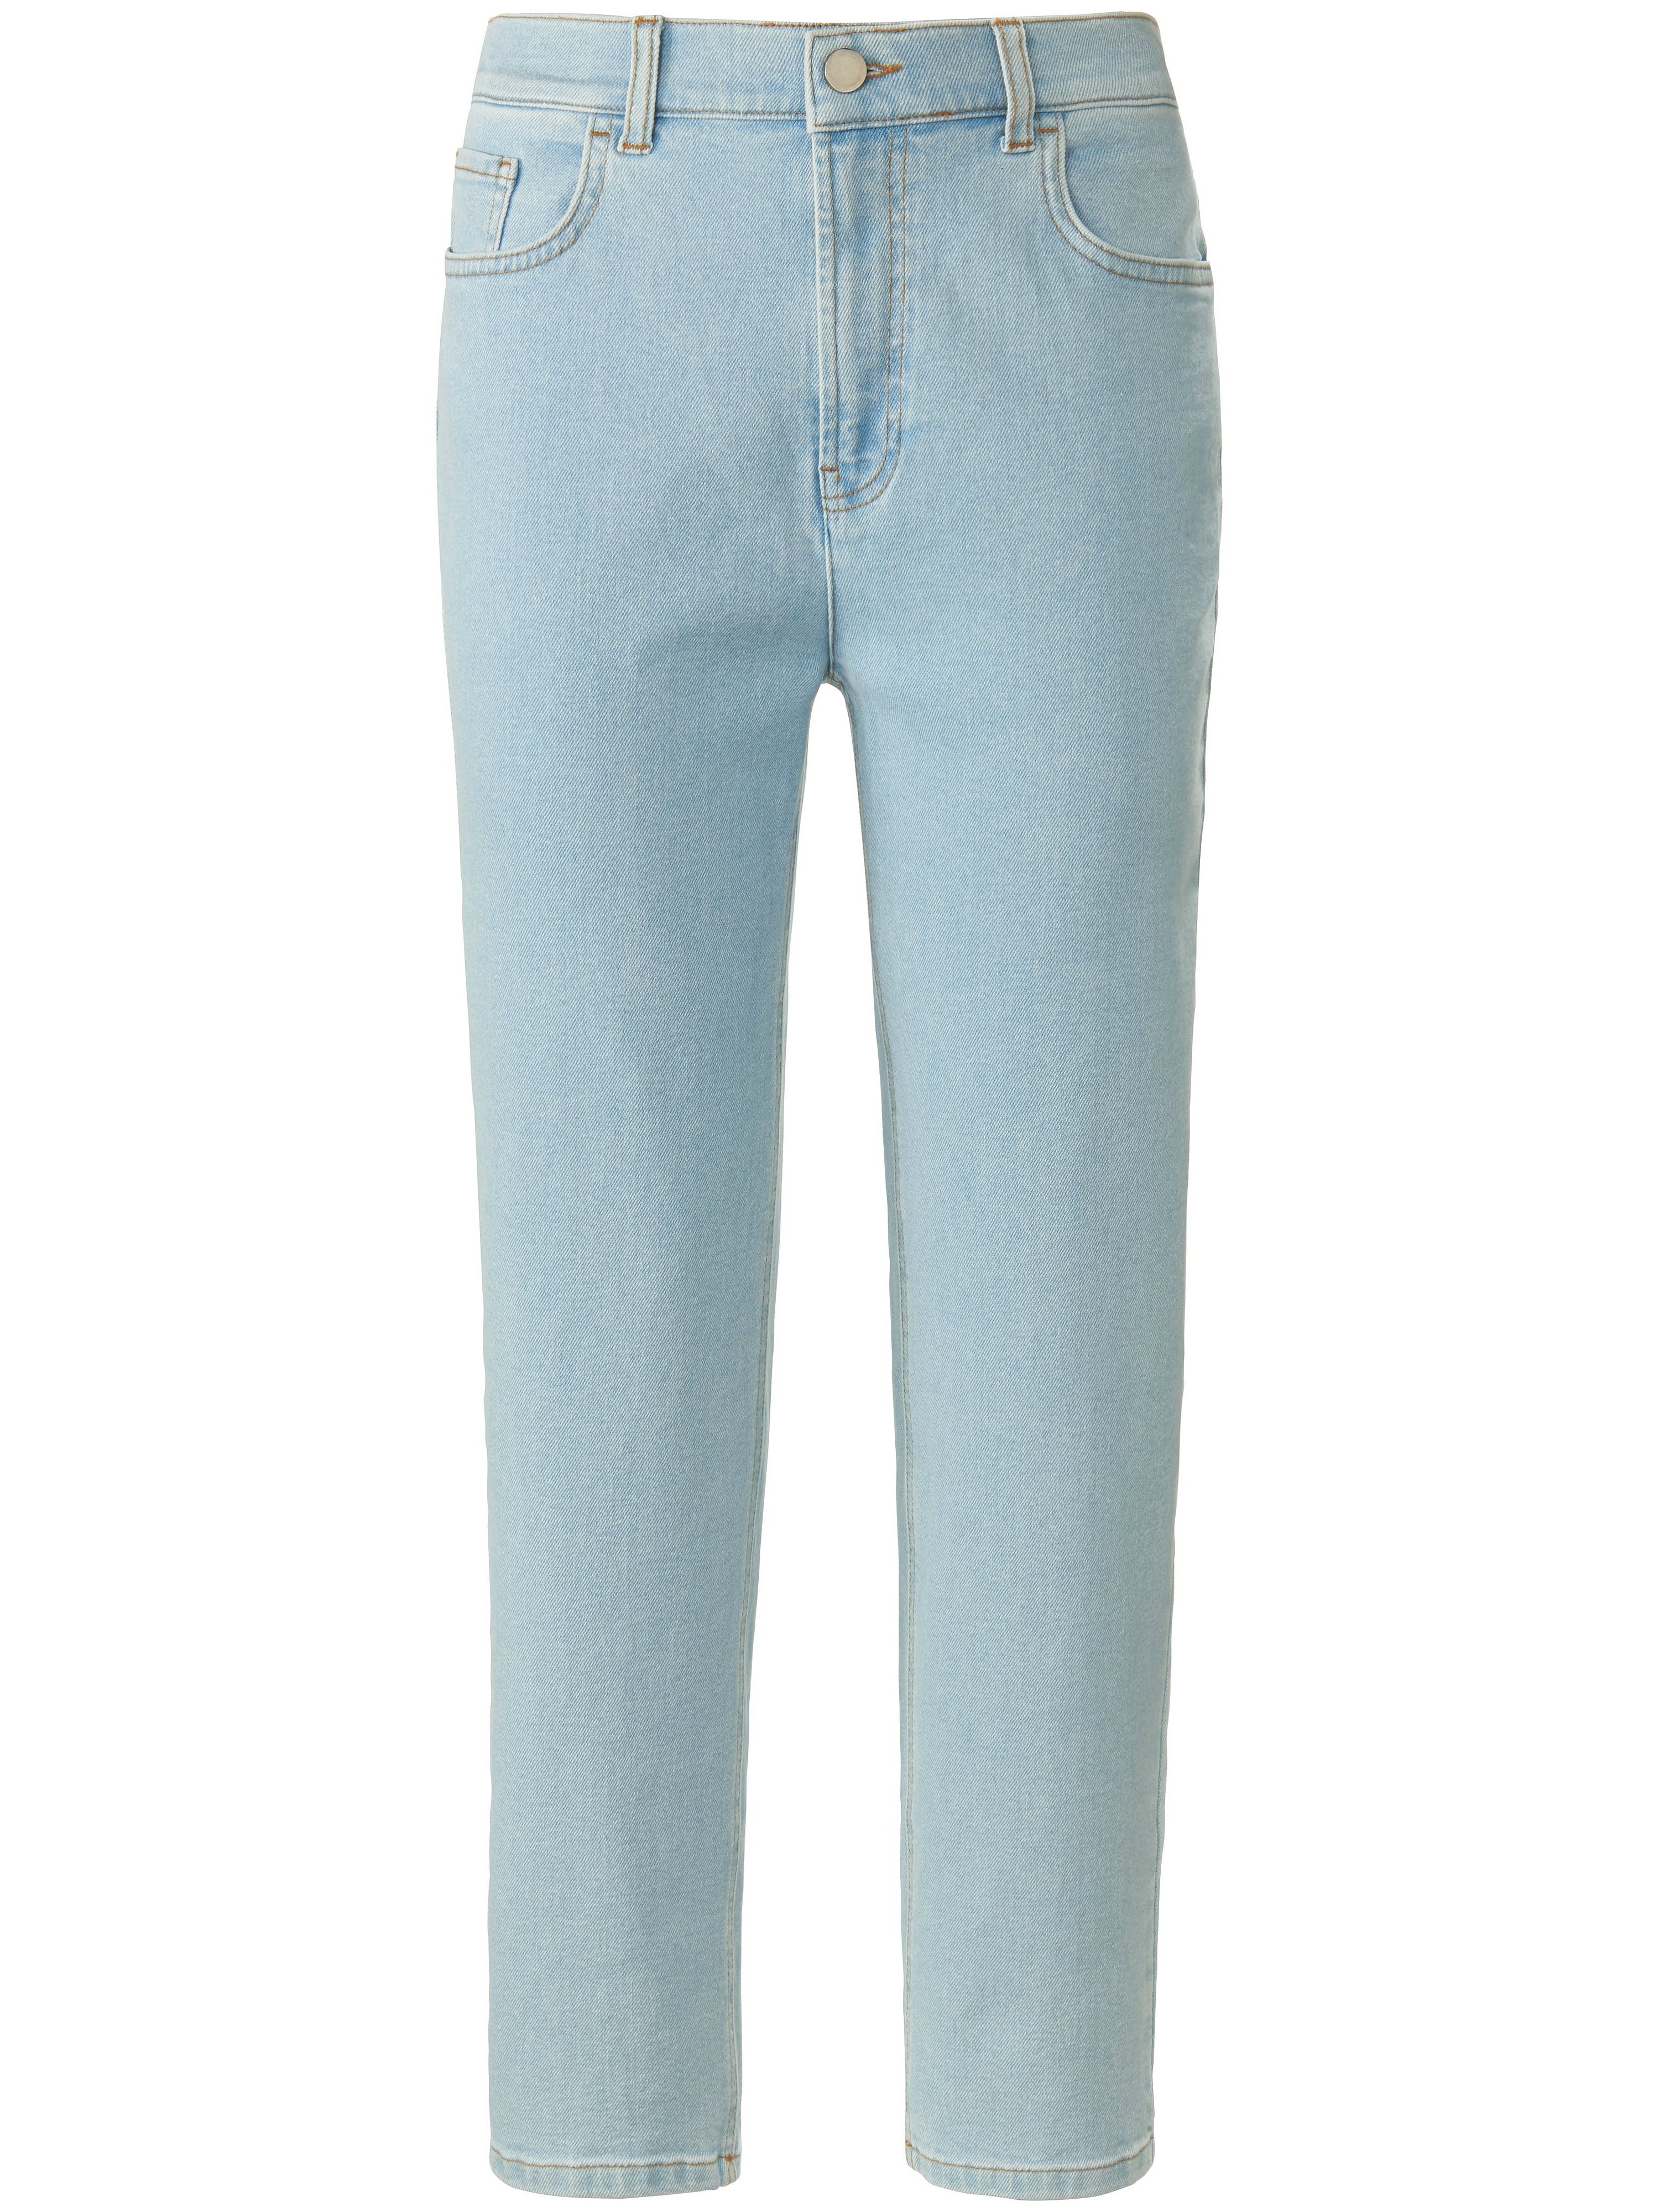 Enkellange jeans moderne, toelopende pasvorm Van DAY.LIKE denim